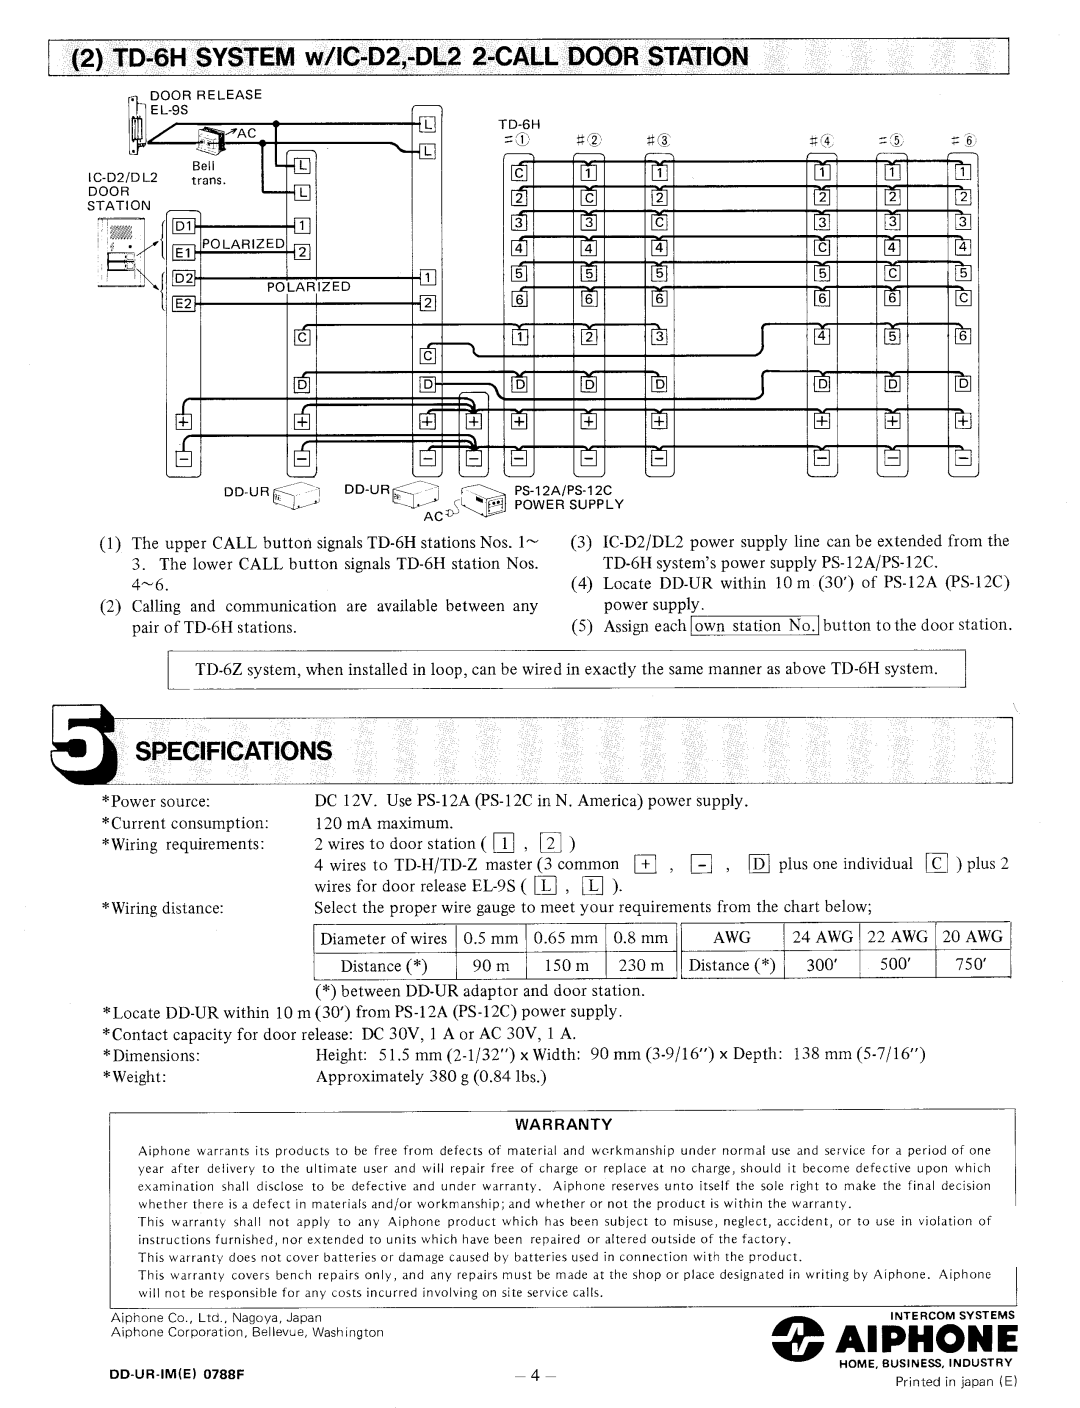 Aiphone DD-UR manual 